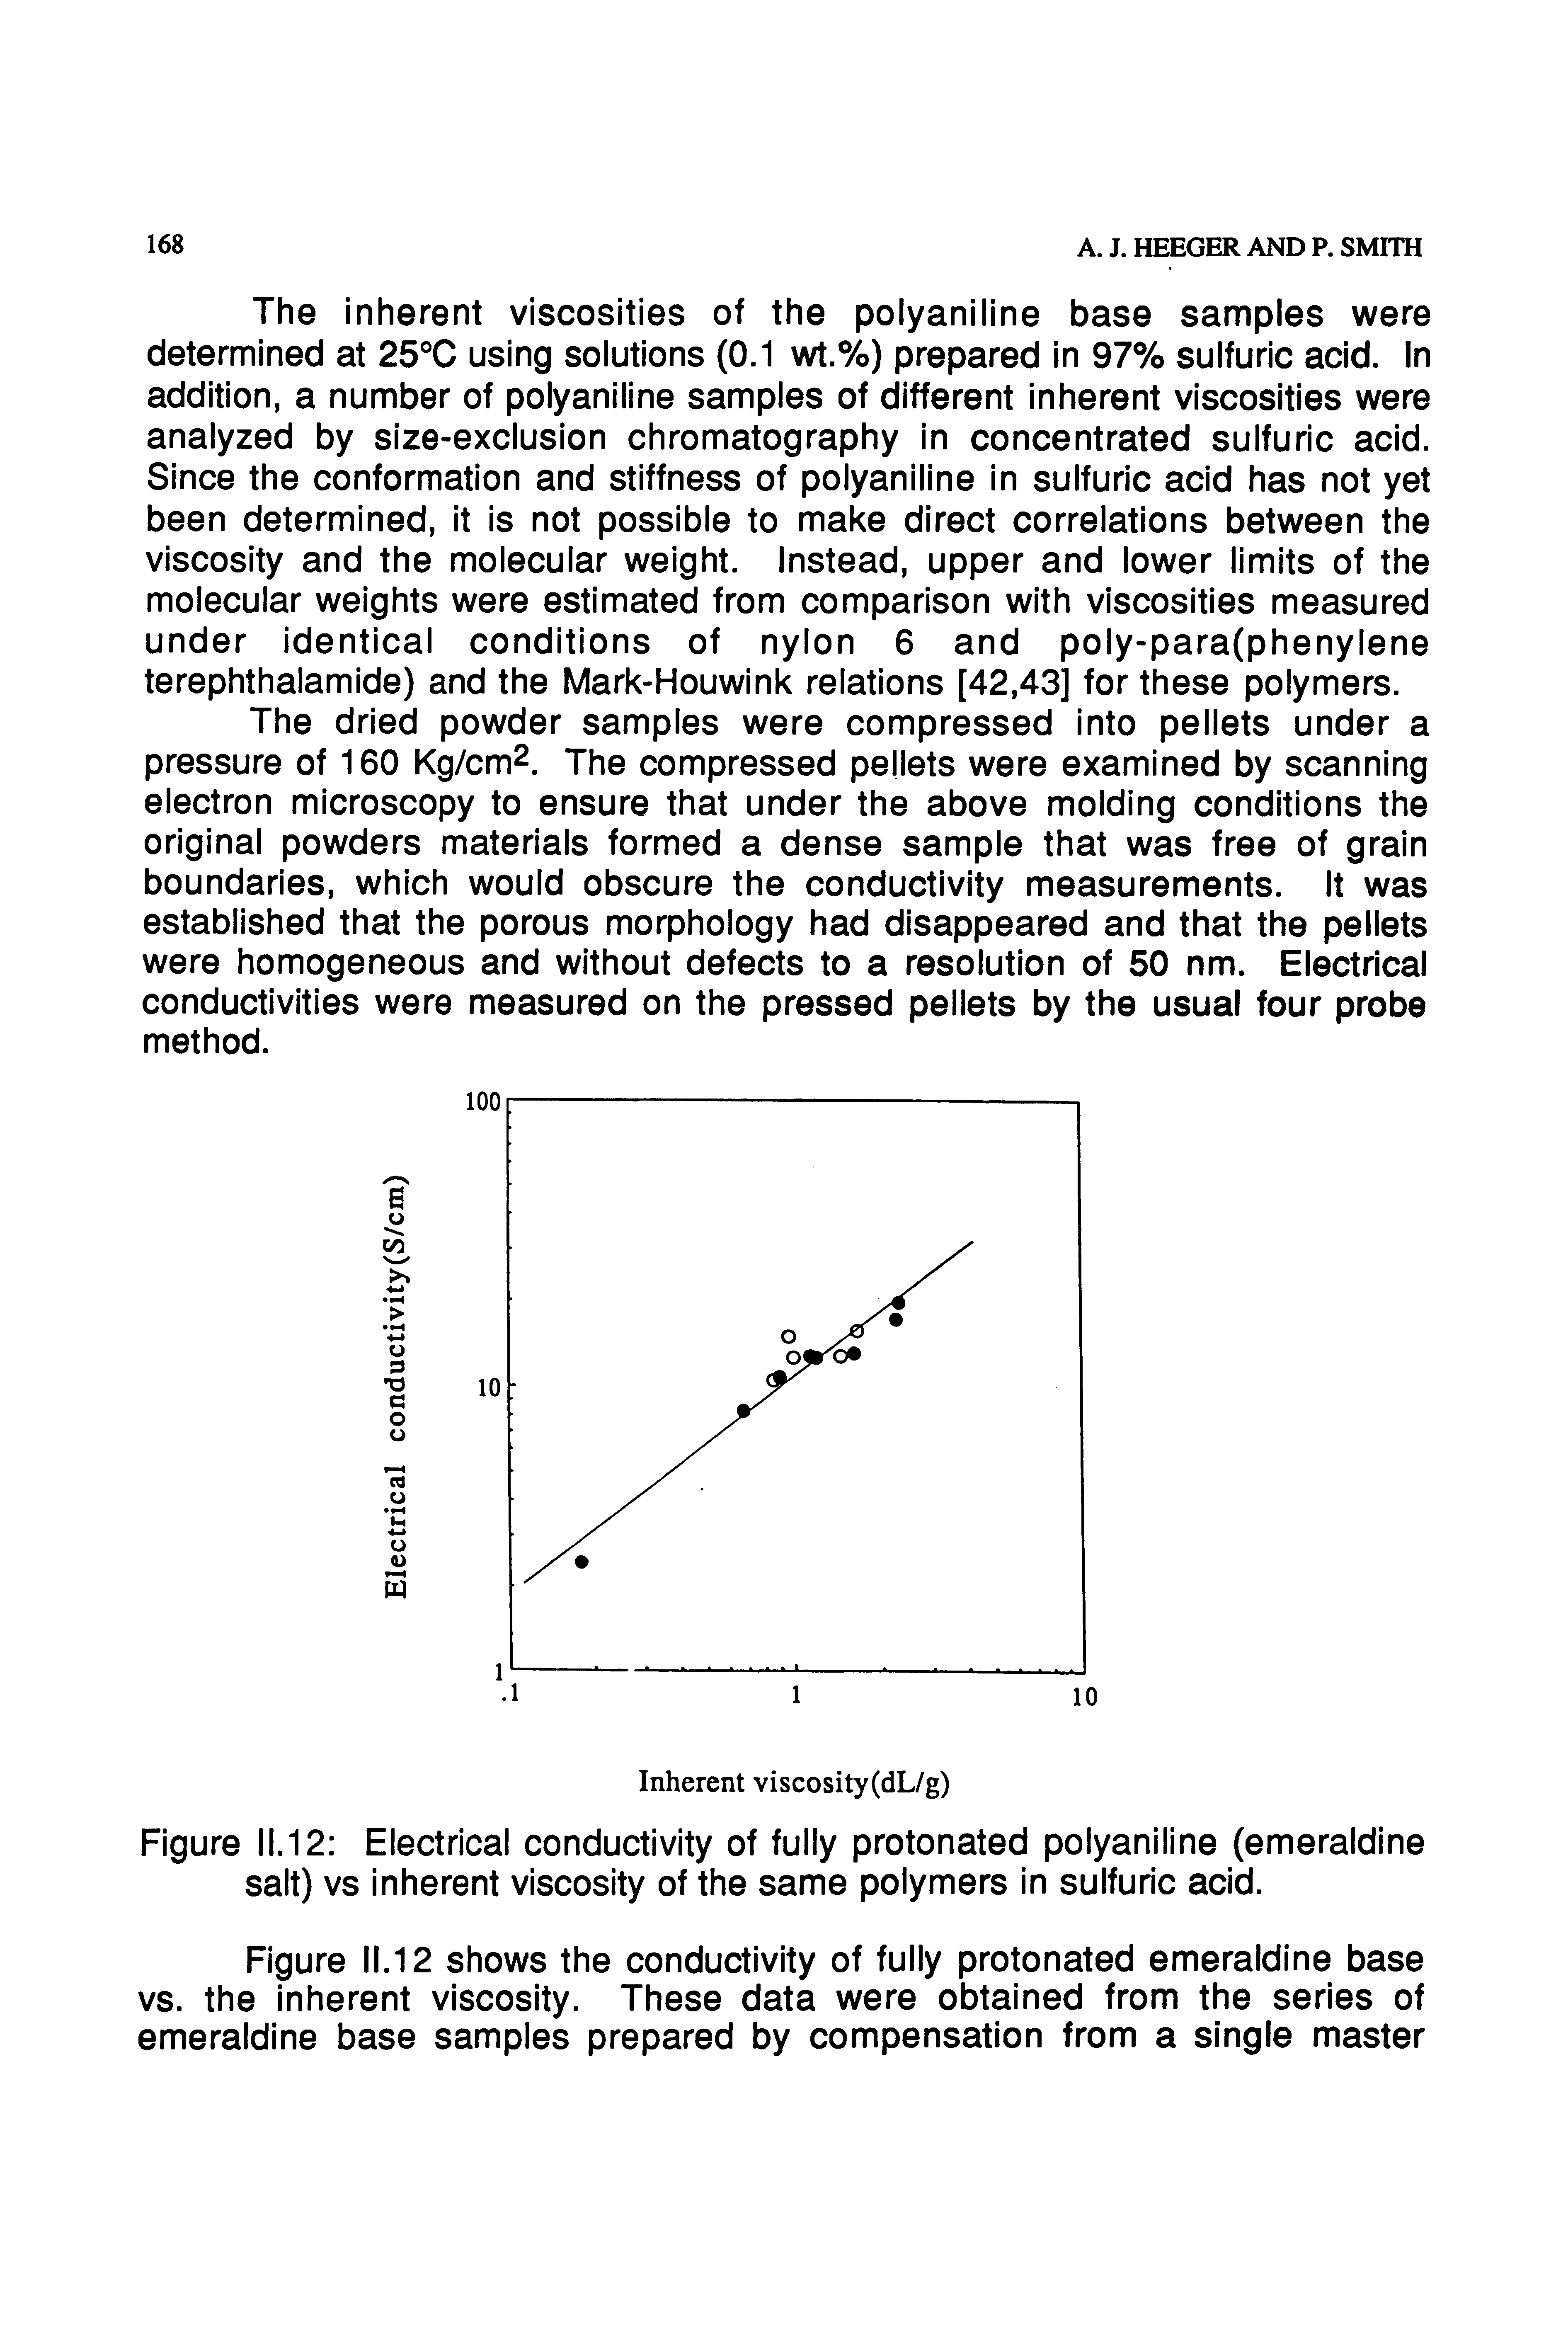 Figure II.12 Electrical conductivity of fully protonated polyaniline (emeraldine salt) vs inherent viscosity of the same polymers in sulfuric acid.